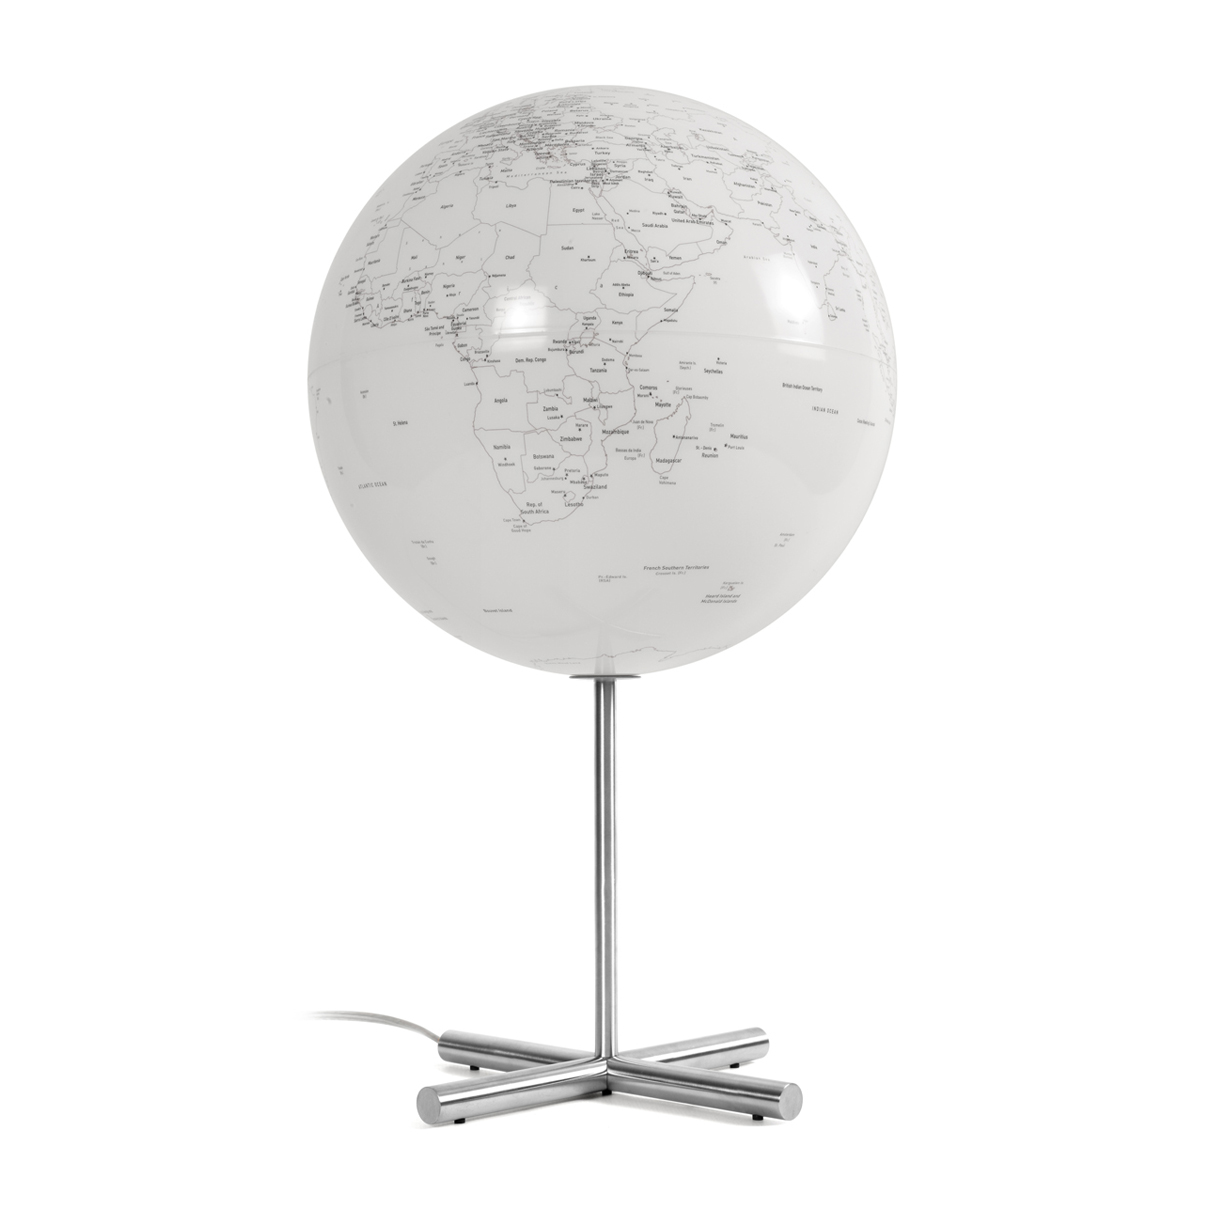 Atmosphere globus Globe Lamp 30 cm